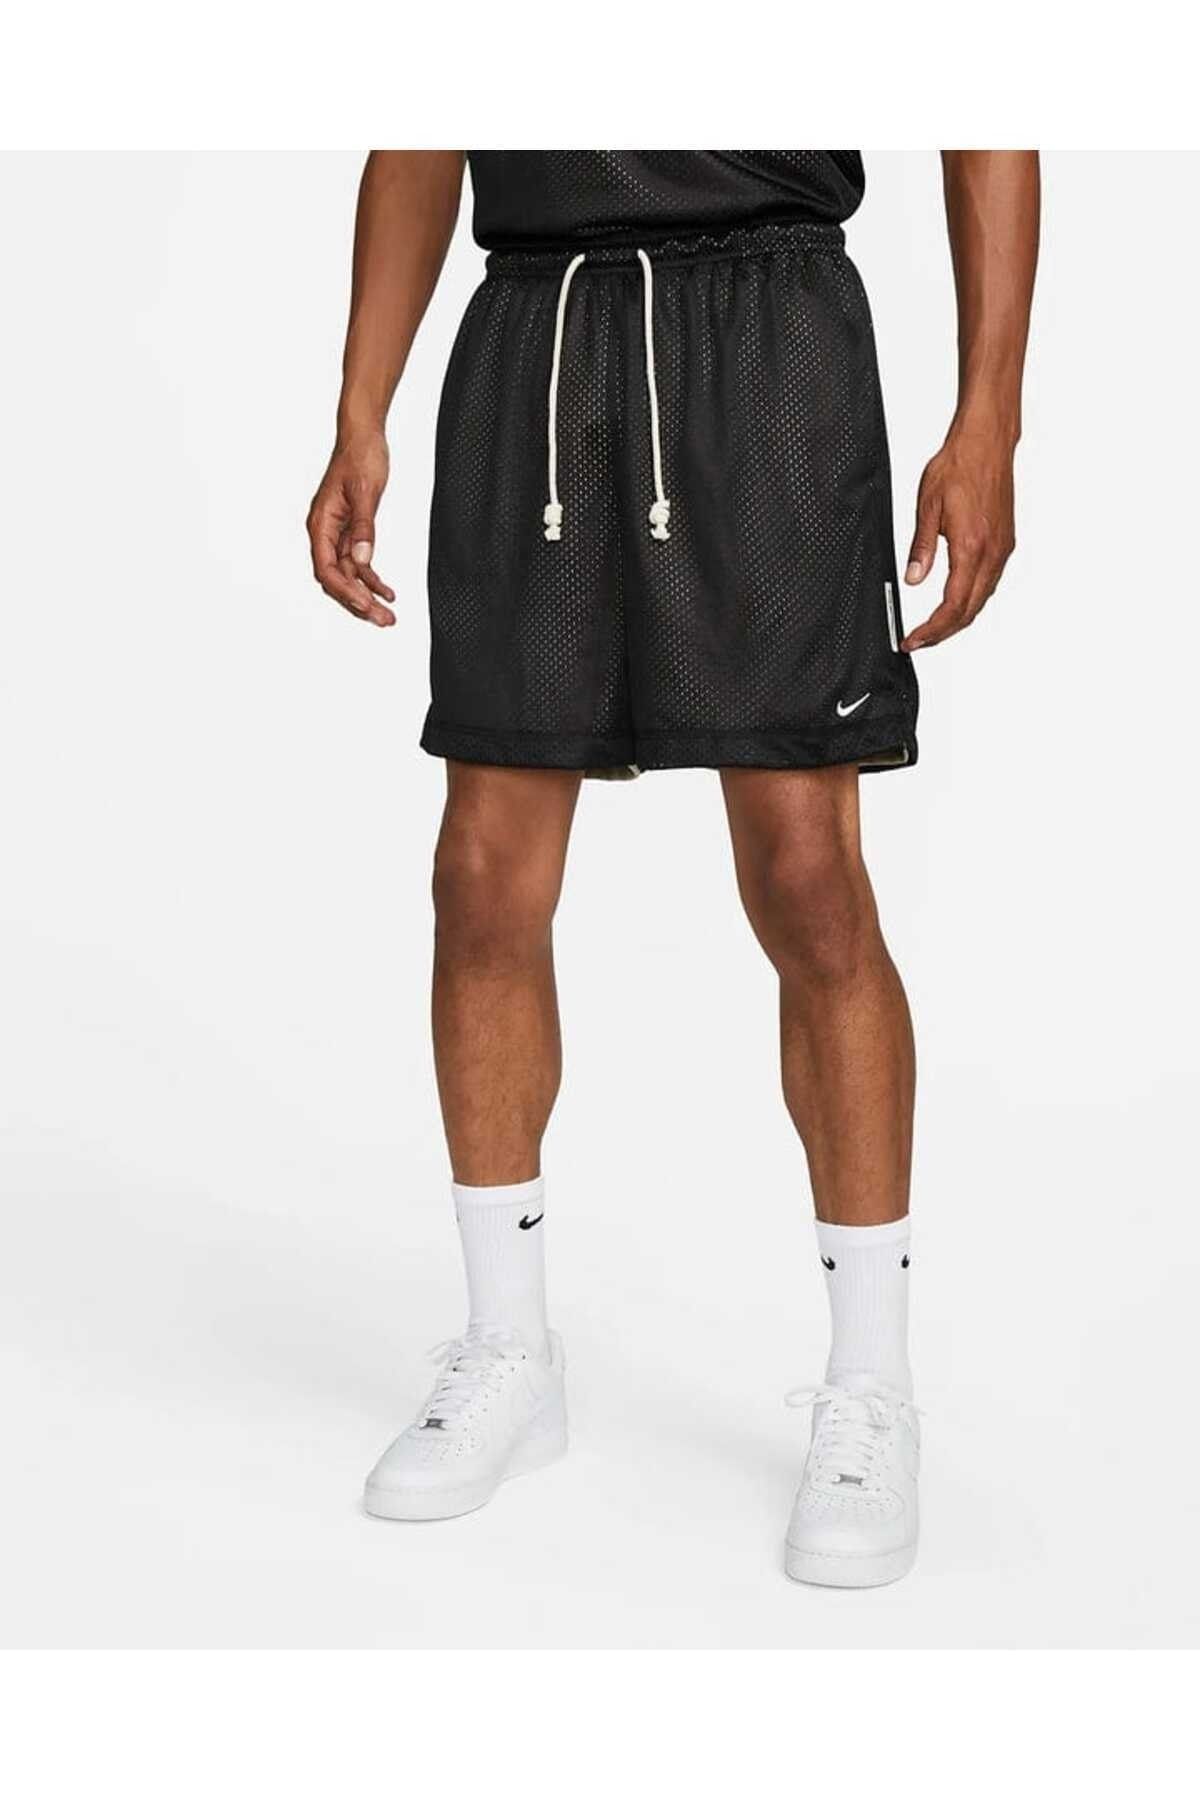 Nike Dri-FIT Standart Issue Çift Taraflı 6" Erkek Basketbol Şortu CNG-STORE®